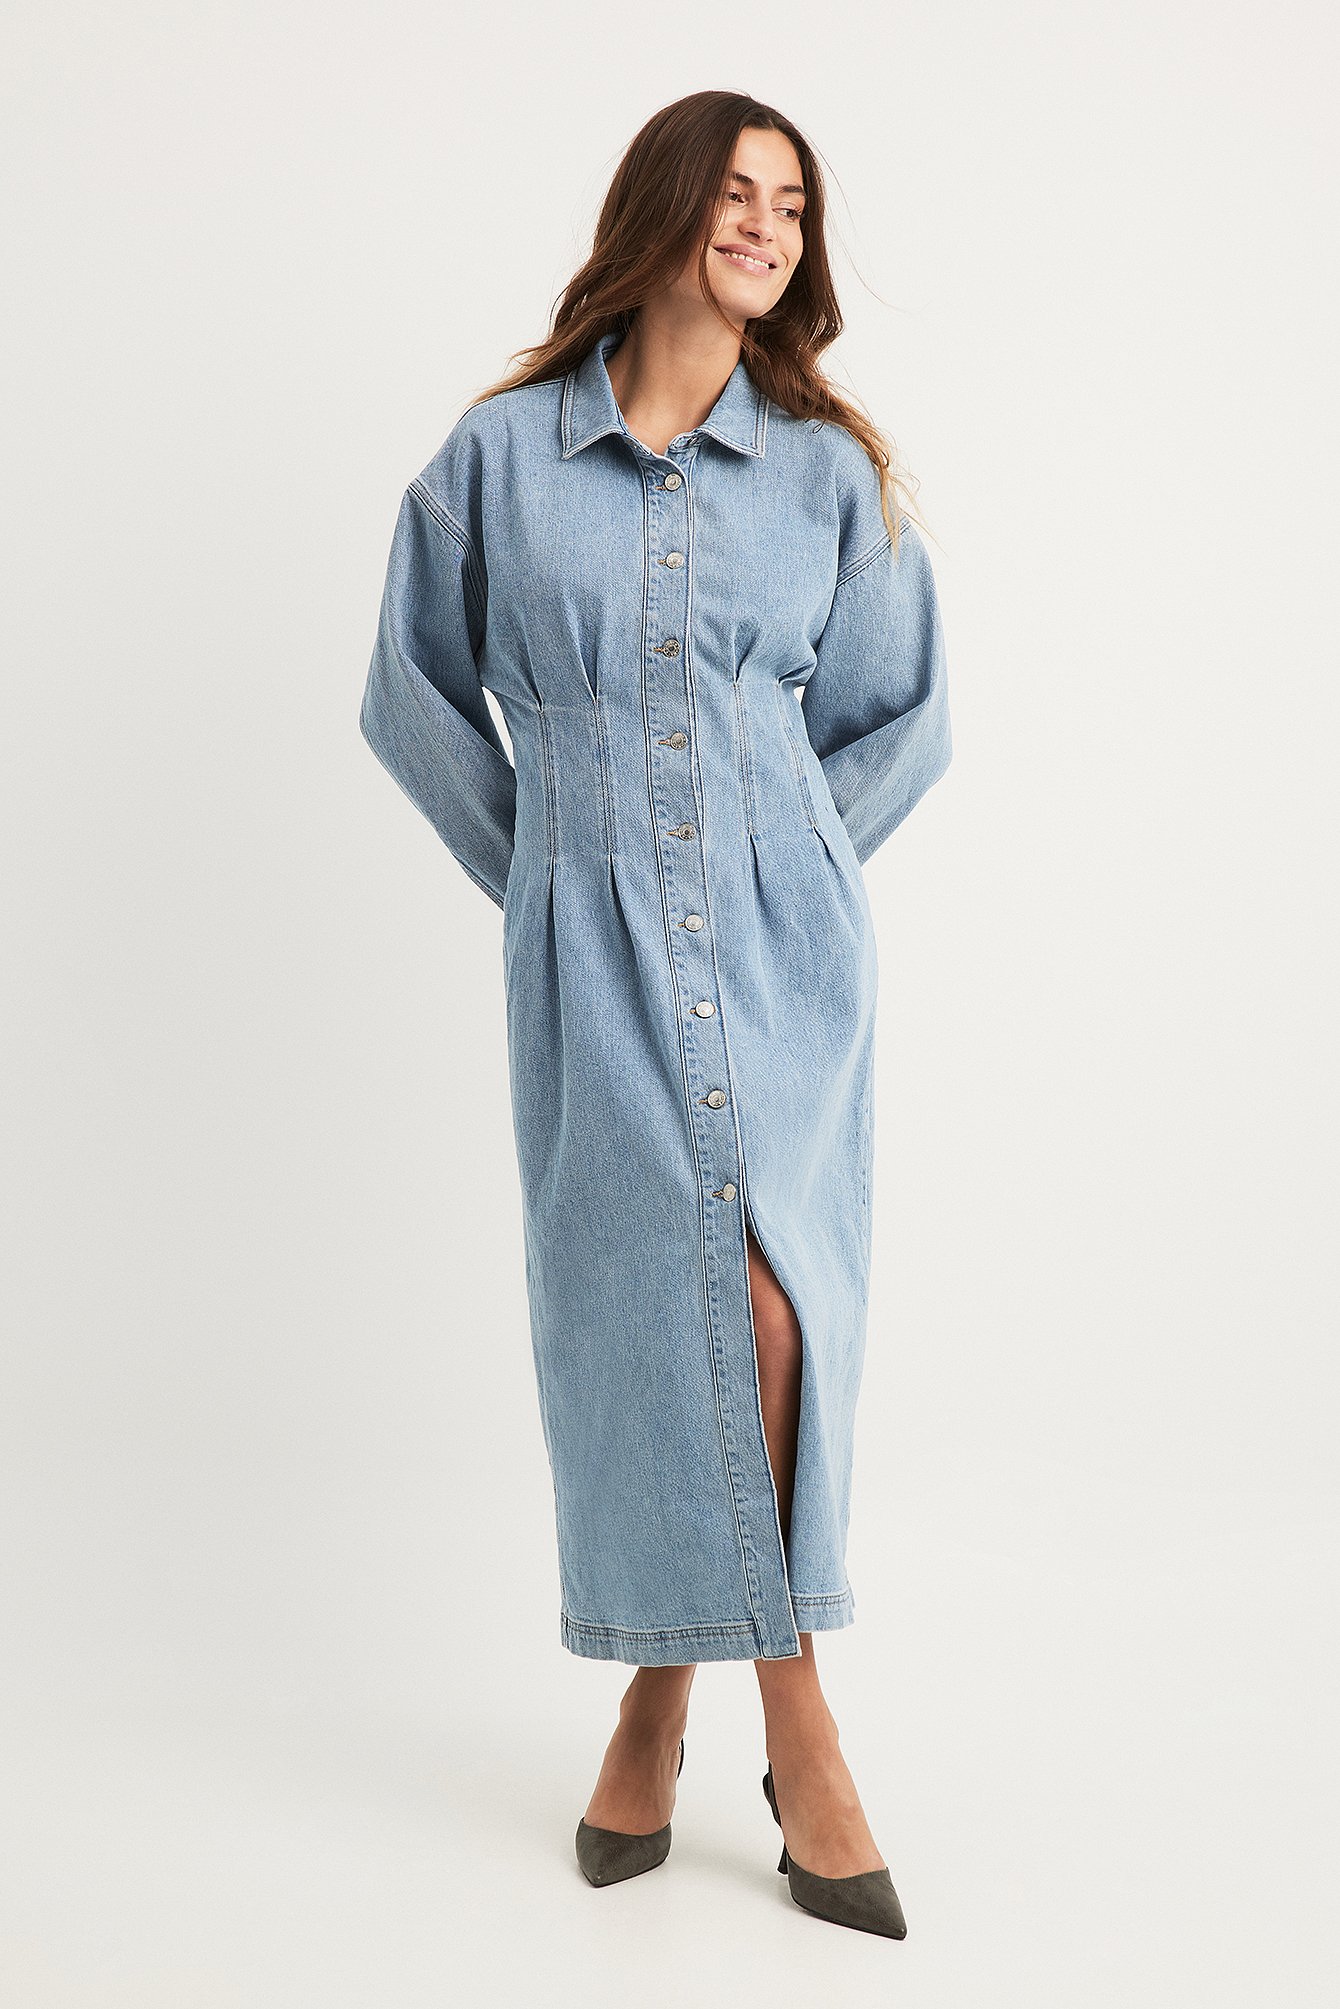 Denim Shirt Maxi Dress | Target Australia